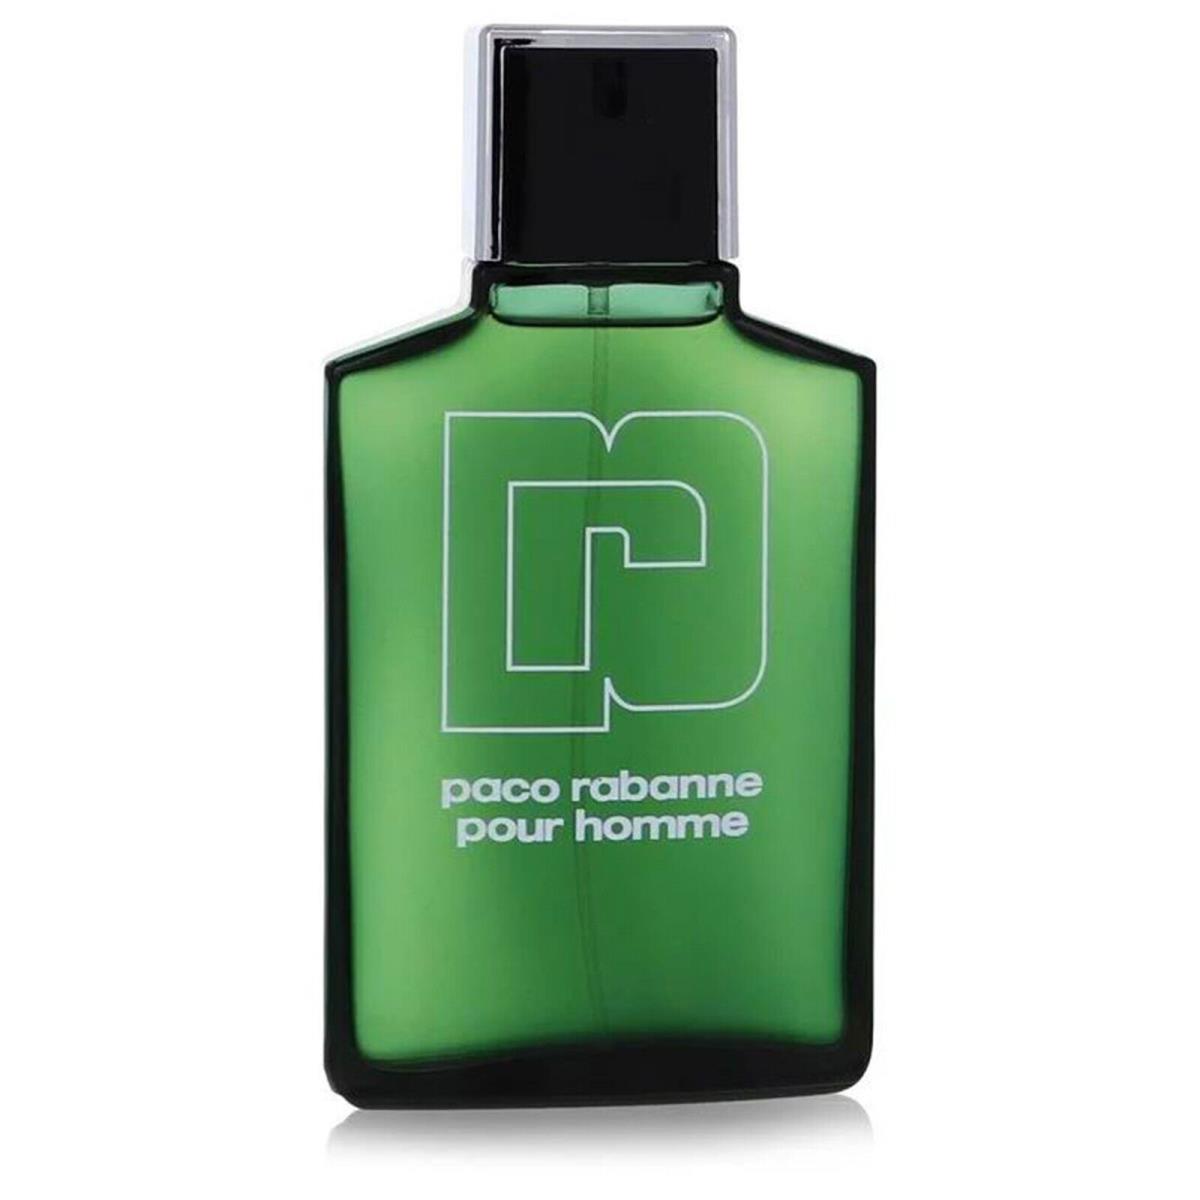 Paco Rabanne 3.4 oz Edt Cologne For Men - Tester - Fragrance